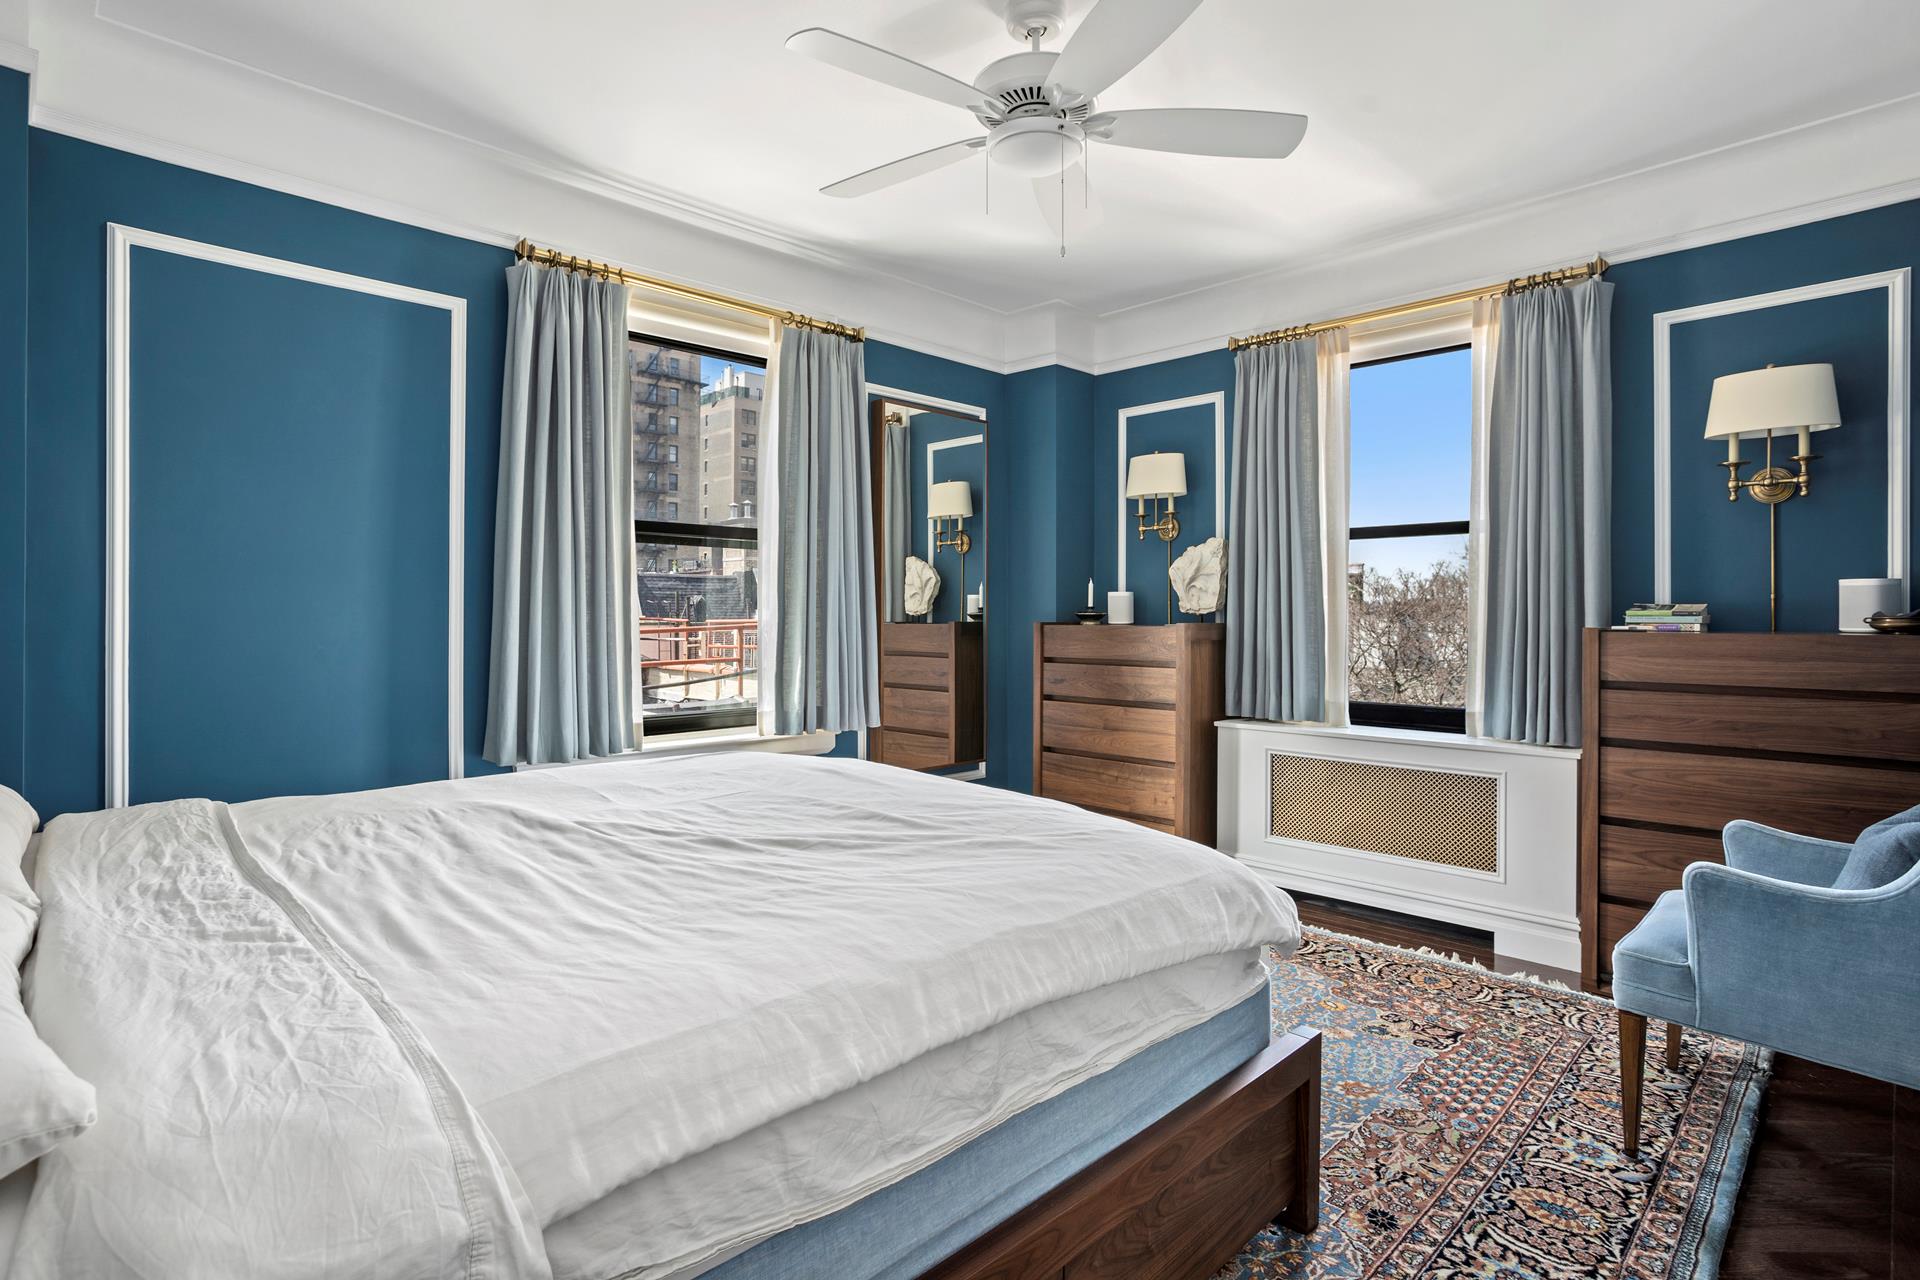 300 West 108th Street 7D, Upper West Side, Upper West Side, NYC - 2 Bedrooms  
1 Bathrooms  
4 Rooms - 